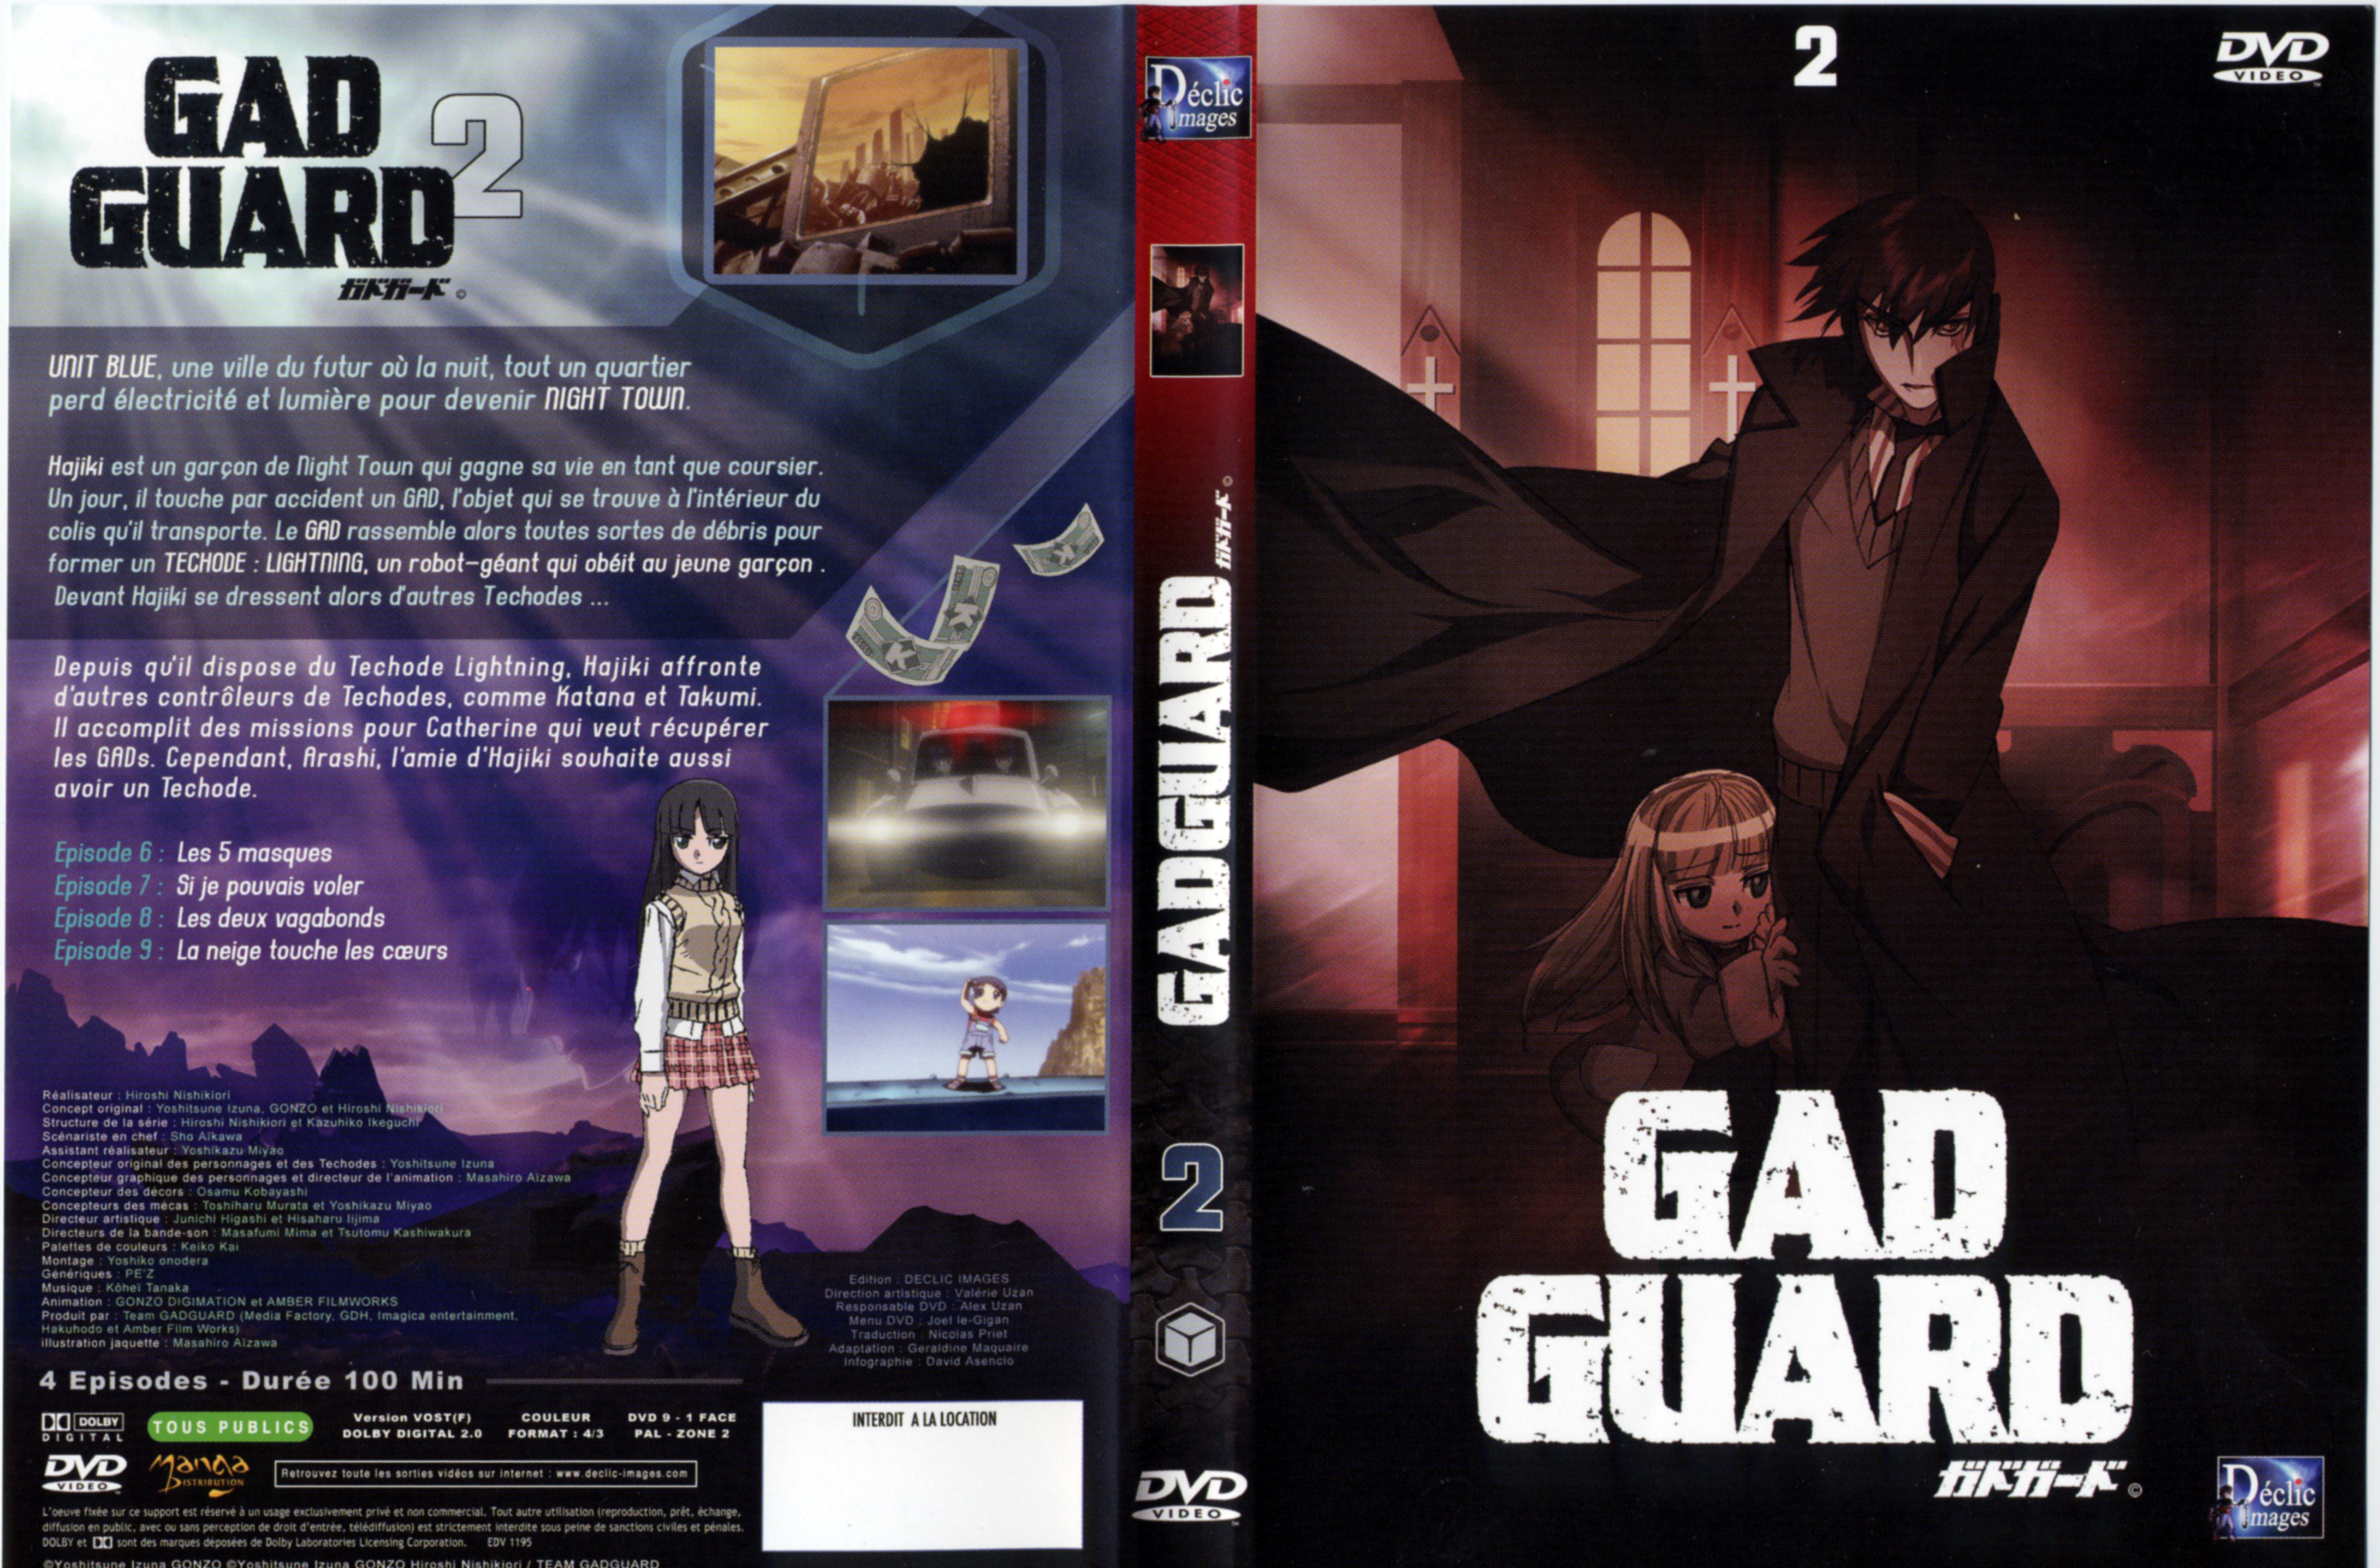 Jaquette DVD Gad Guard DVD 2